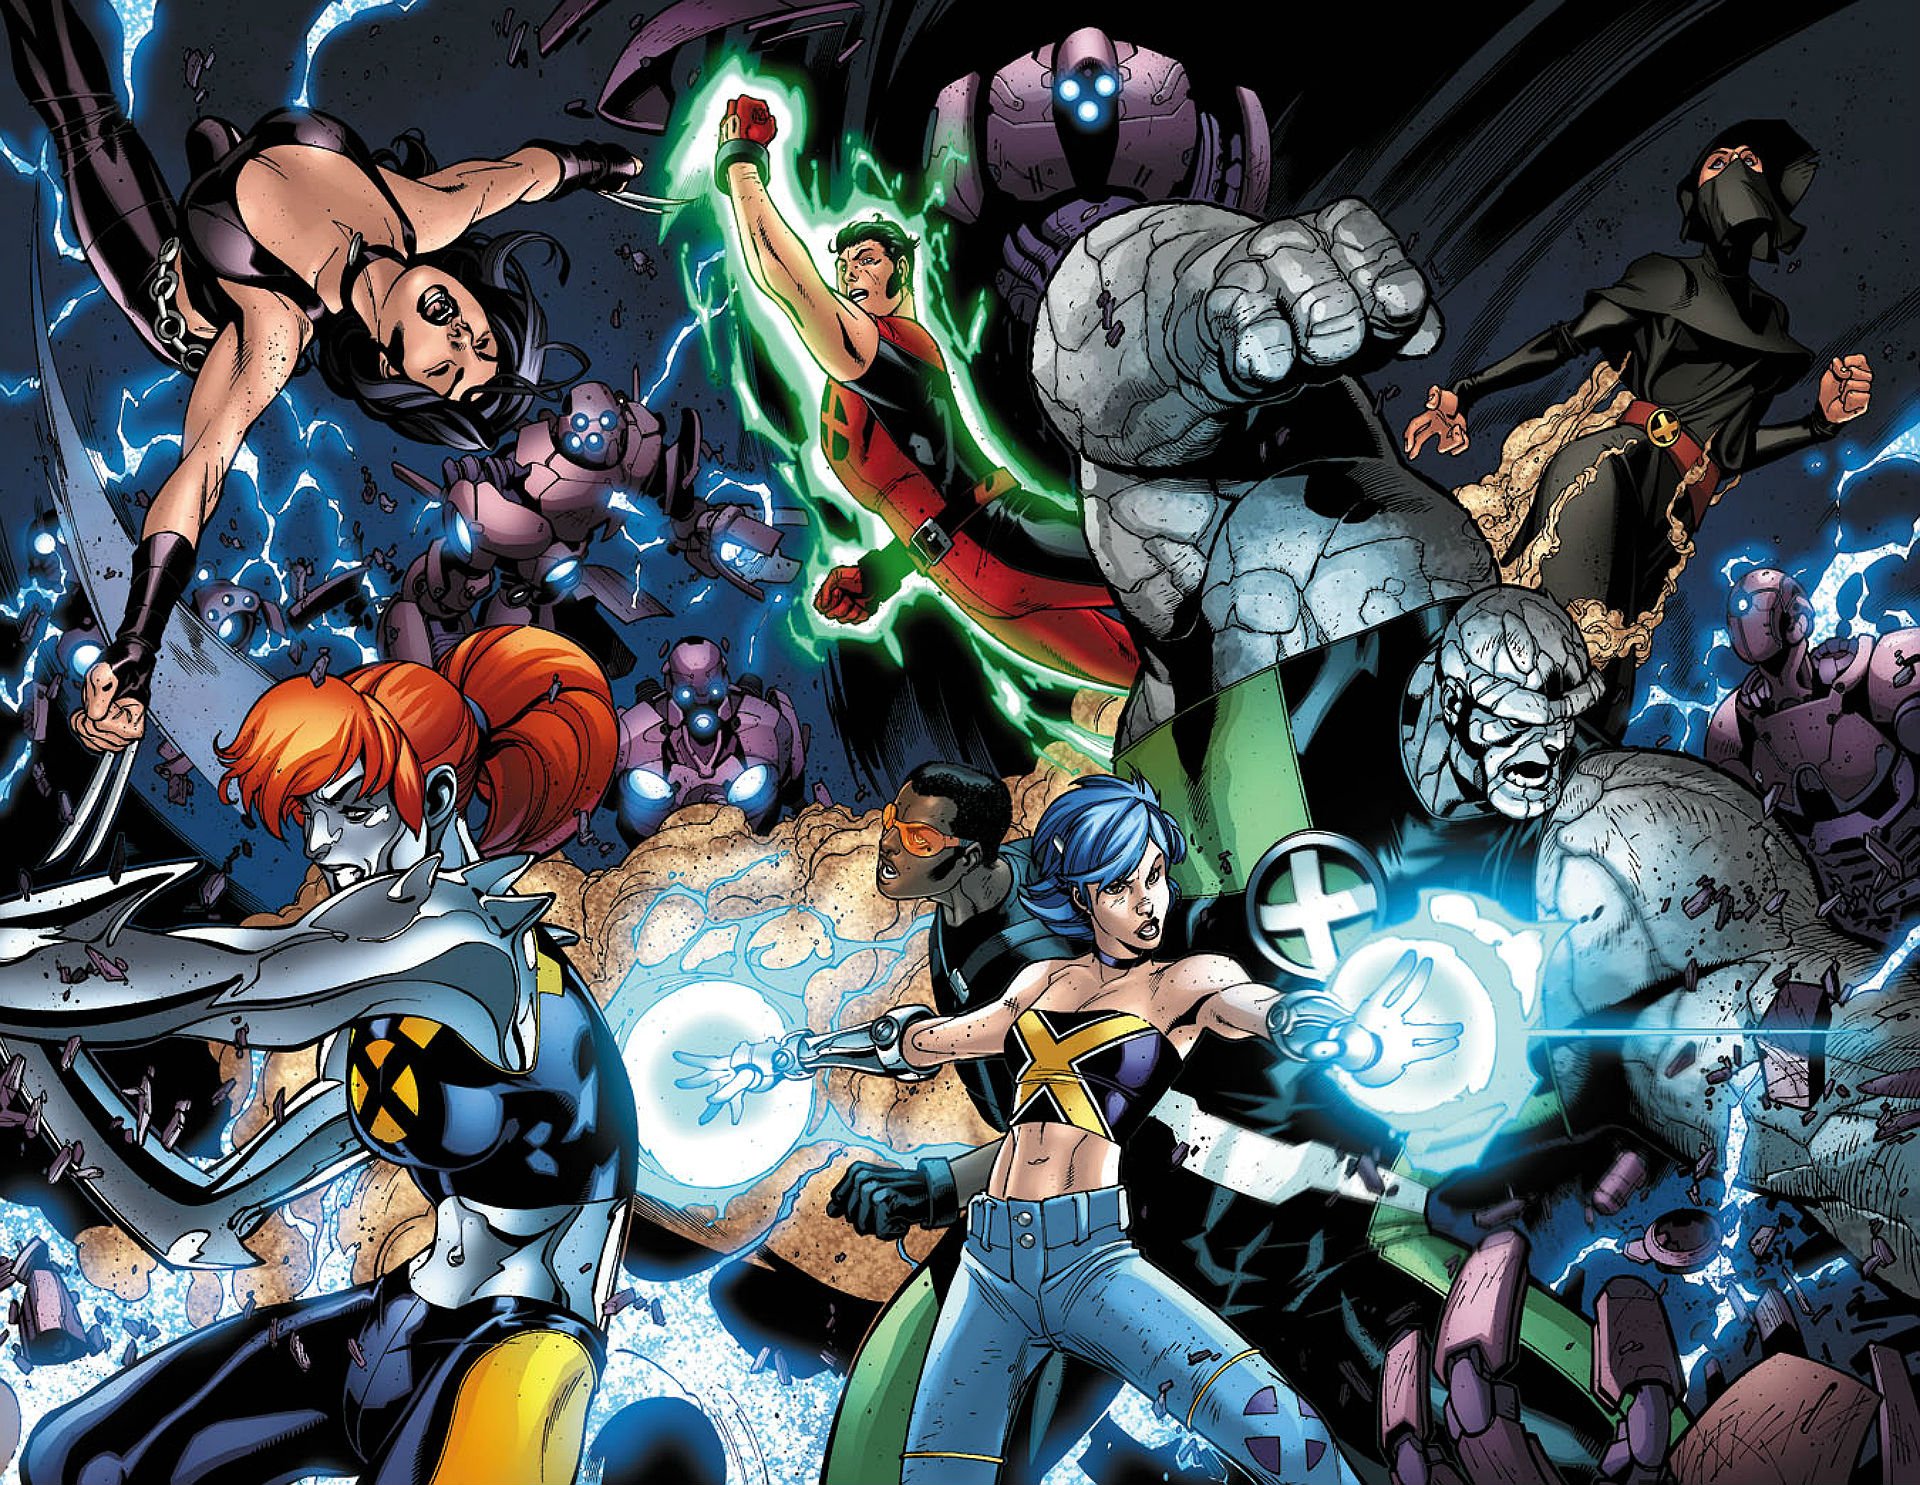 x men, Superhero, Marvel, Action, Adventure, Sci fi, Warrior, Fantasy, Fighting, Hero, Xmen, Comics, Poster Wallpaper